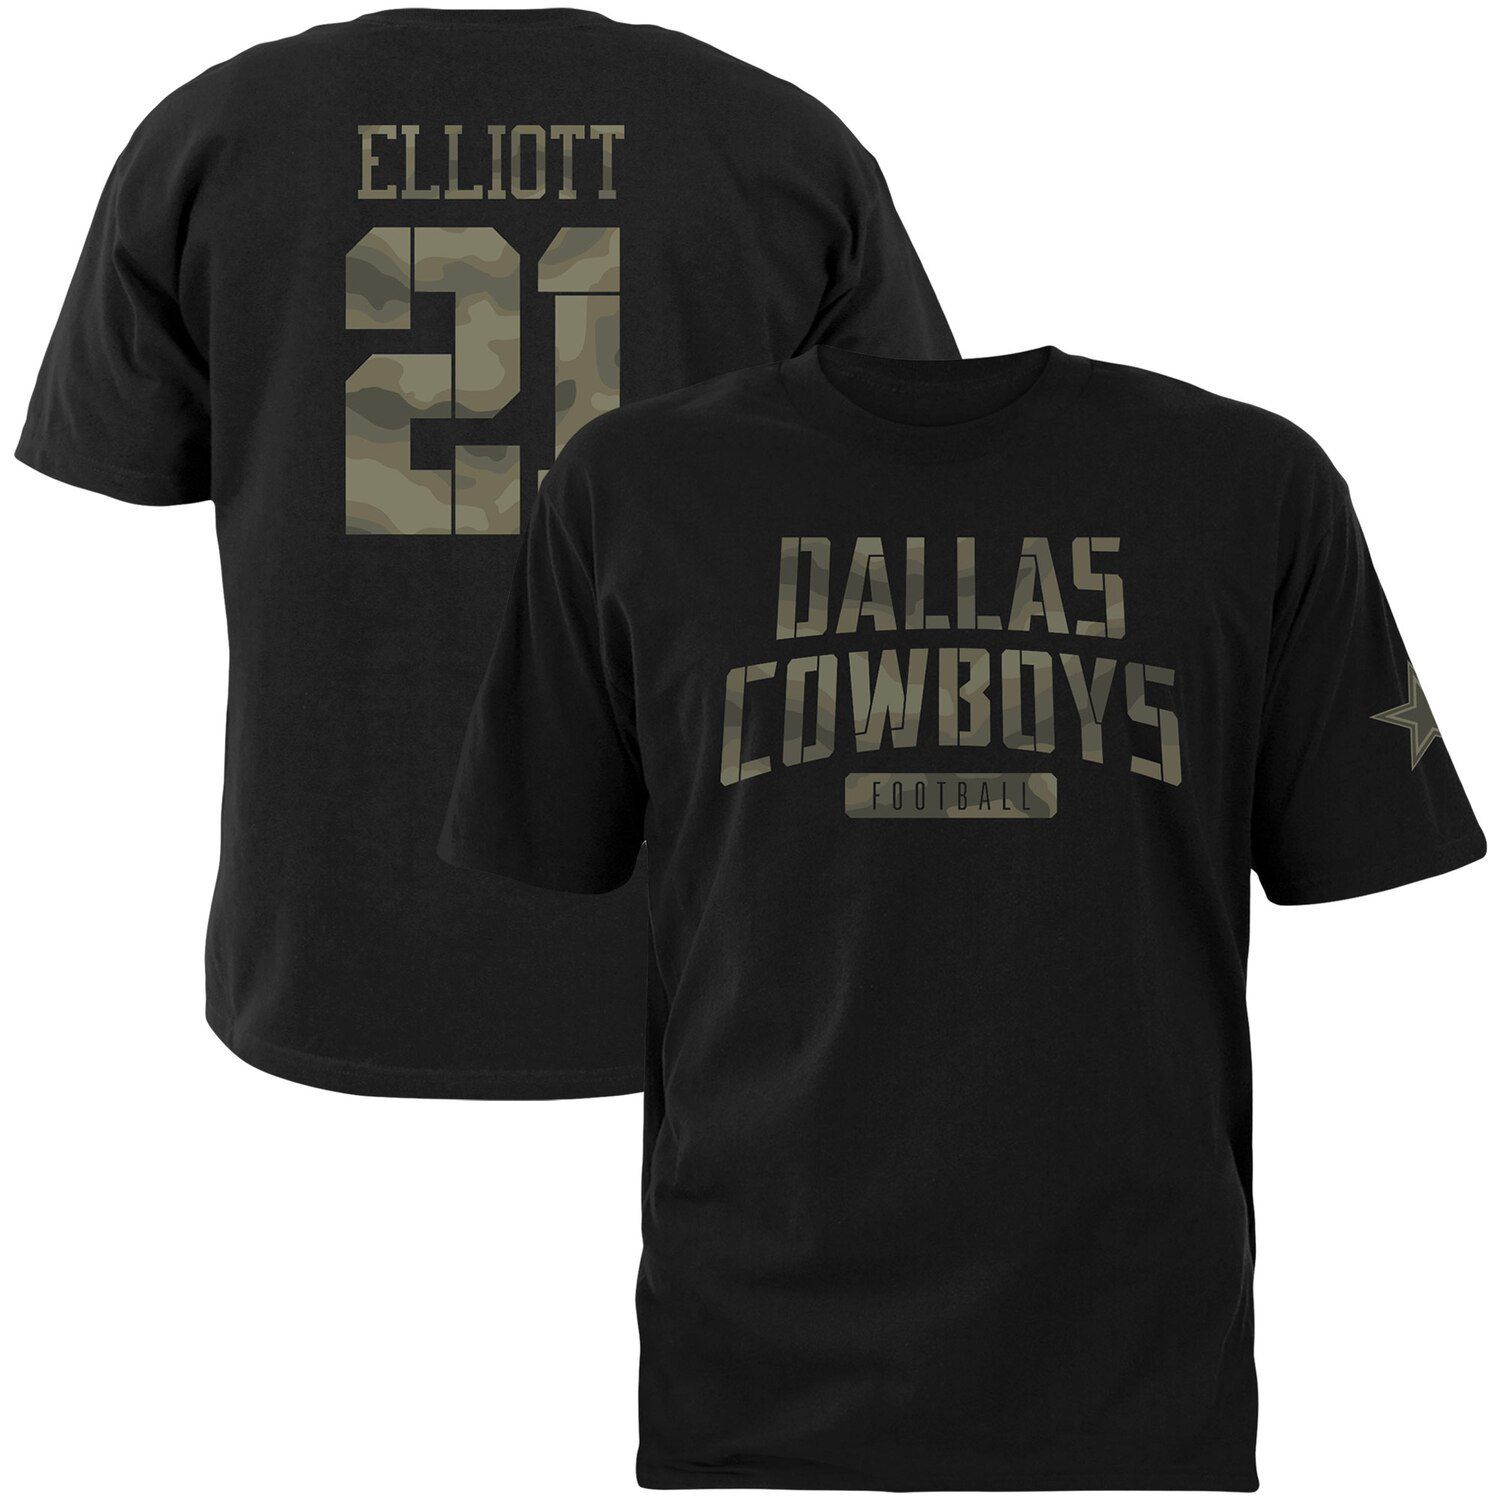 elliott cowboys t shirt